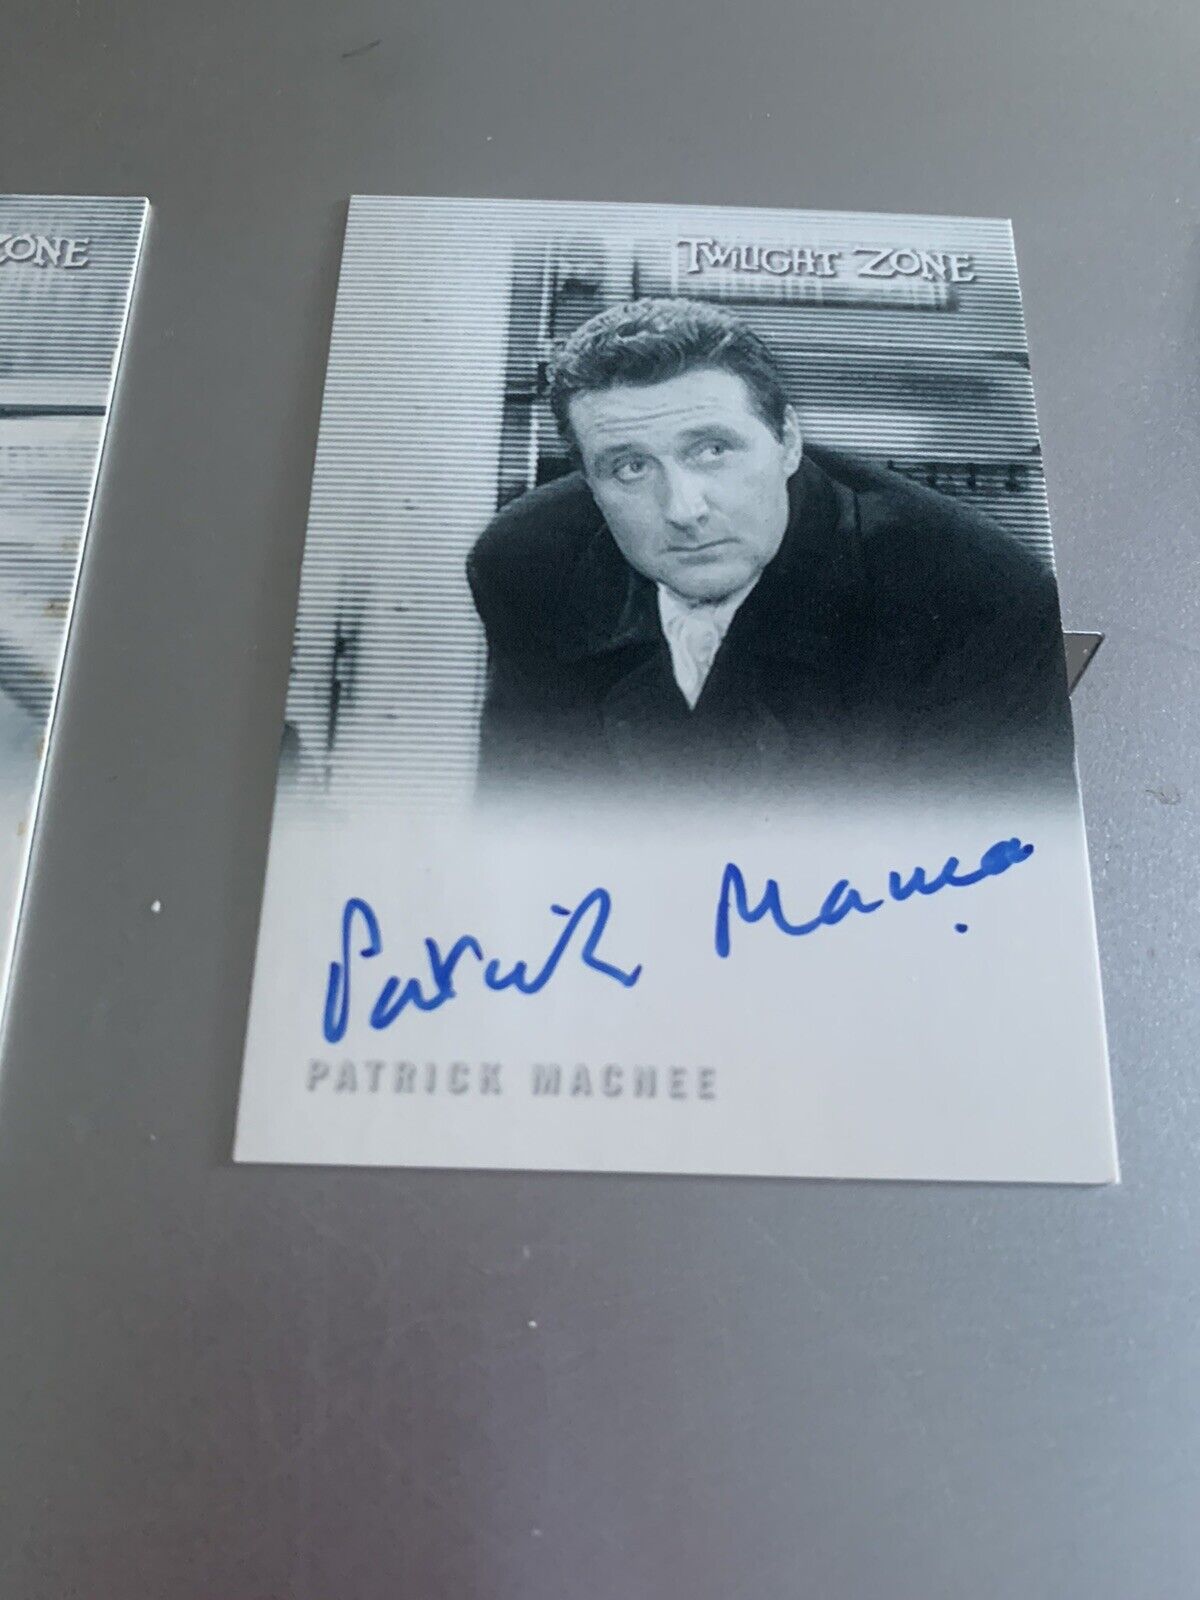 2009 Complete Twilight Zone 50th Anniversary Patrick Macnee A107 autograph card